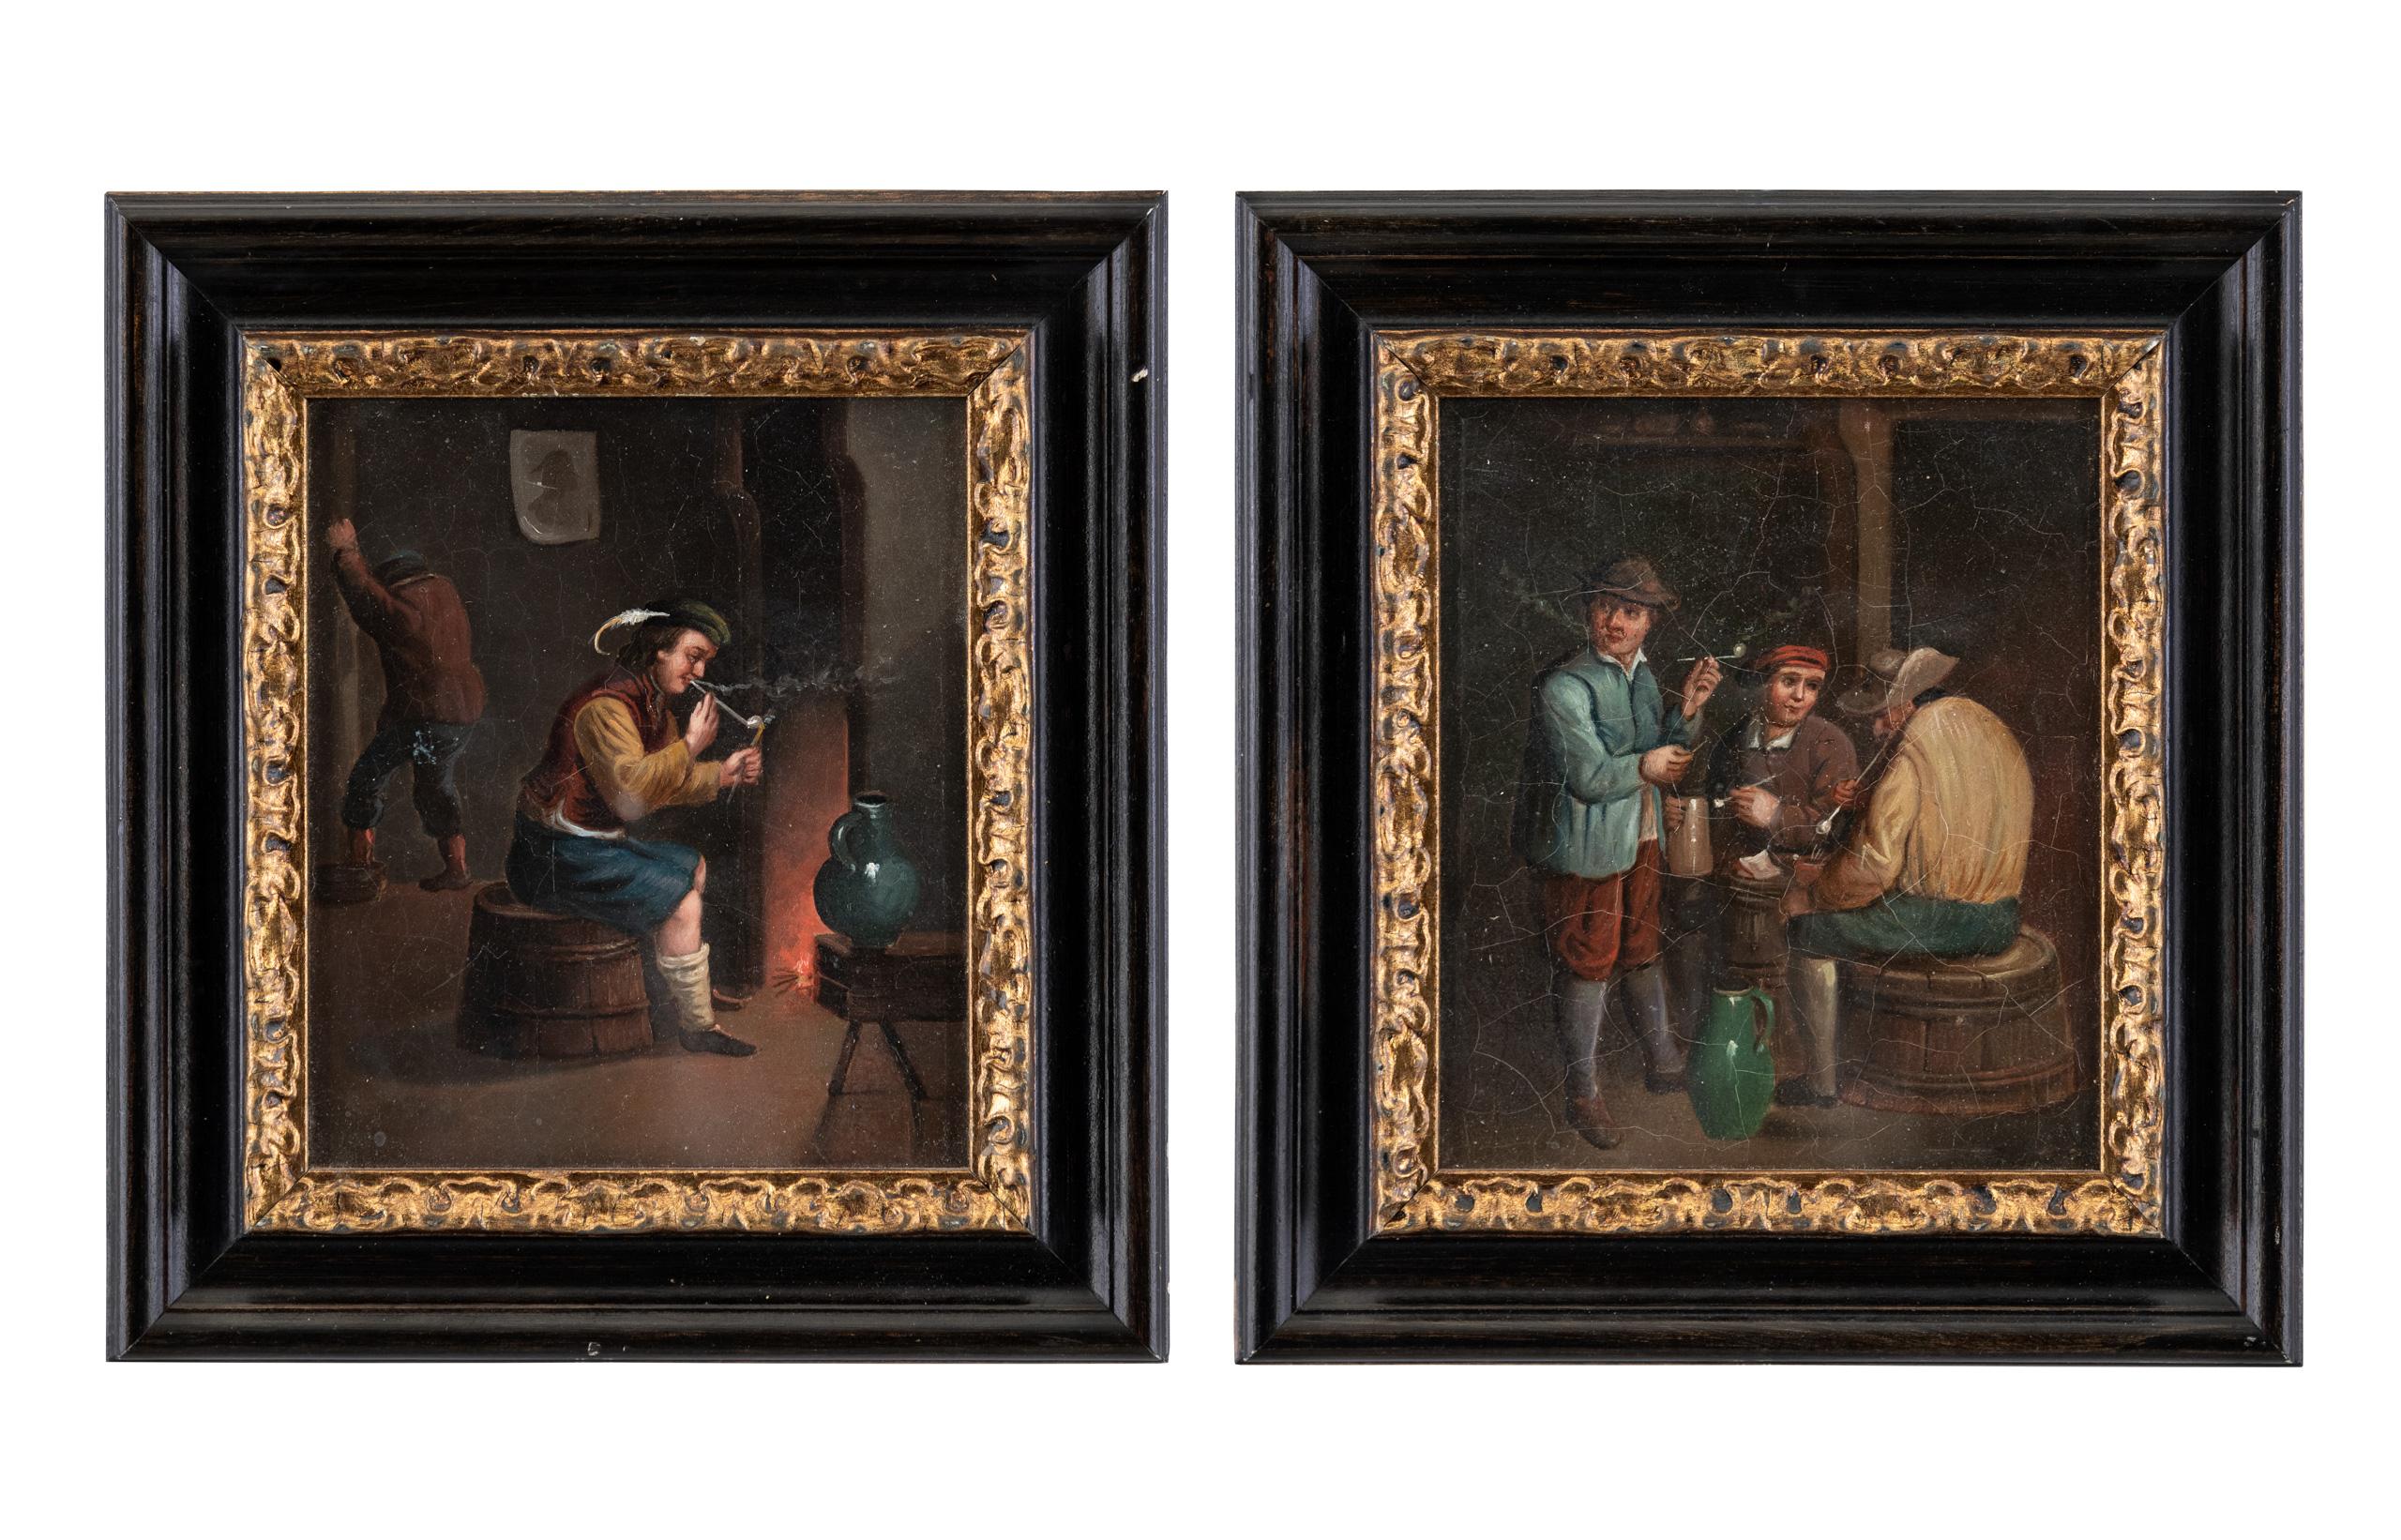 Pair of 19th century Dutch figure paintings - Inn interiors - Oil on canvas